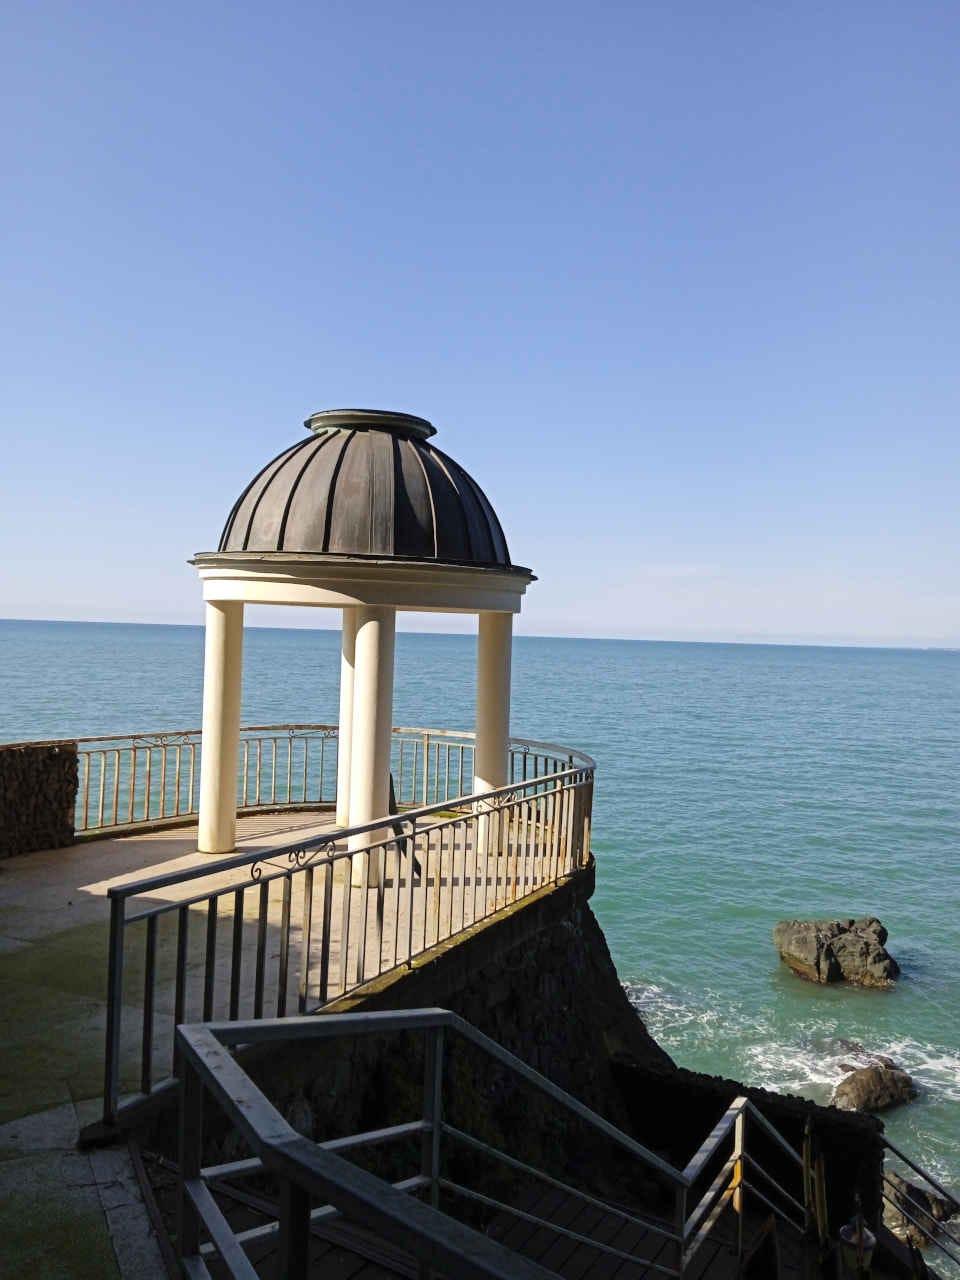 The impressive rotunda perfectly blends into the rocky coast of the Black Sea at the Castello Mare Hotel & Wellness Resort near Kobuleti